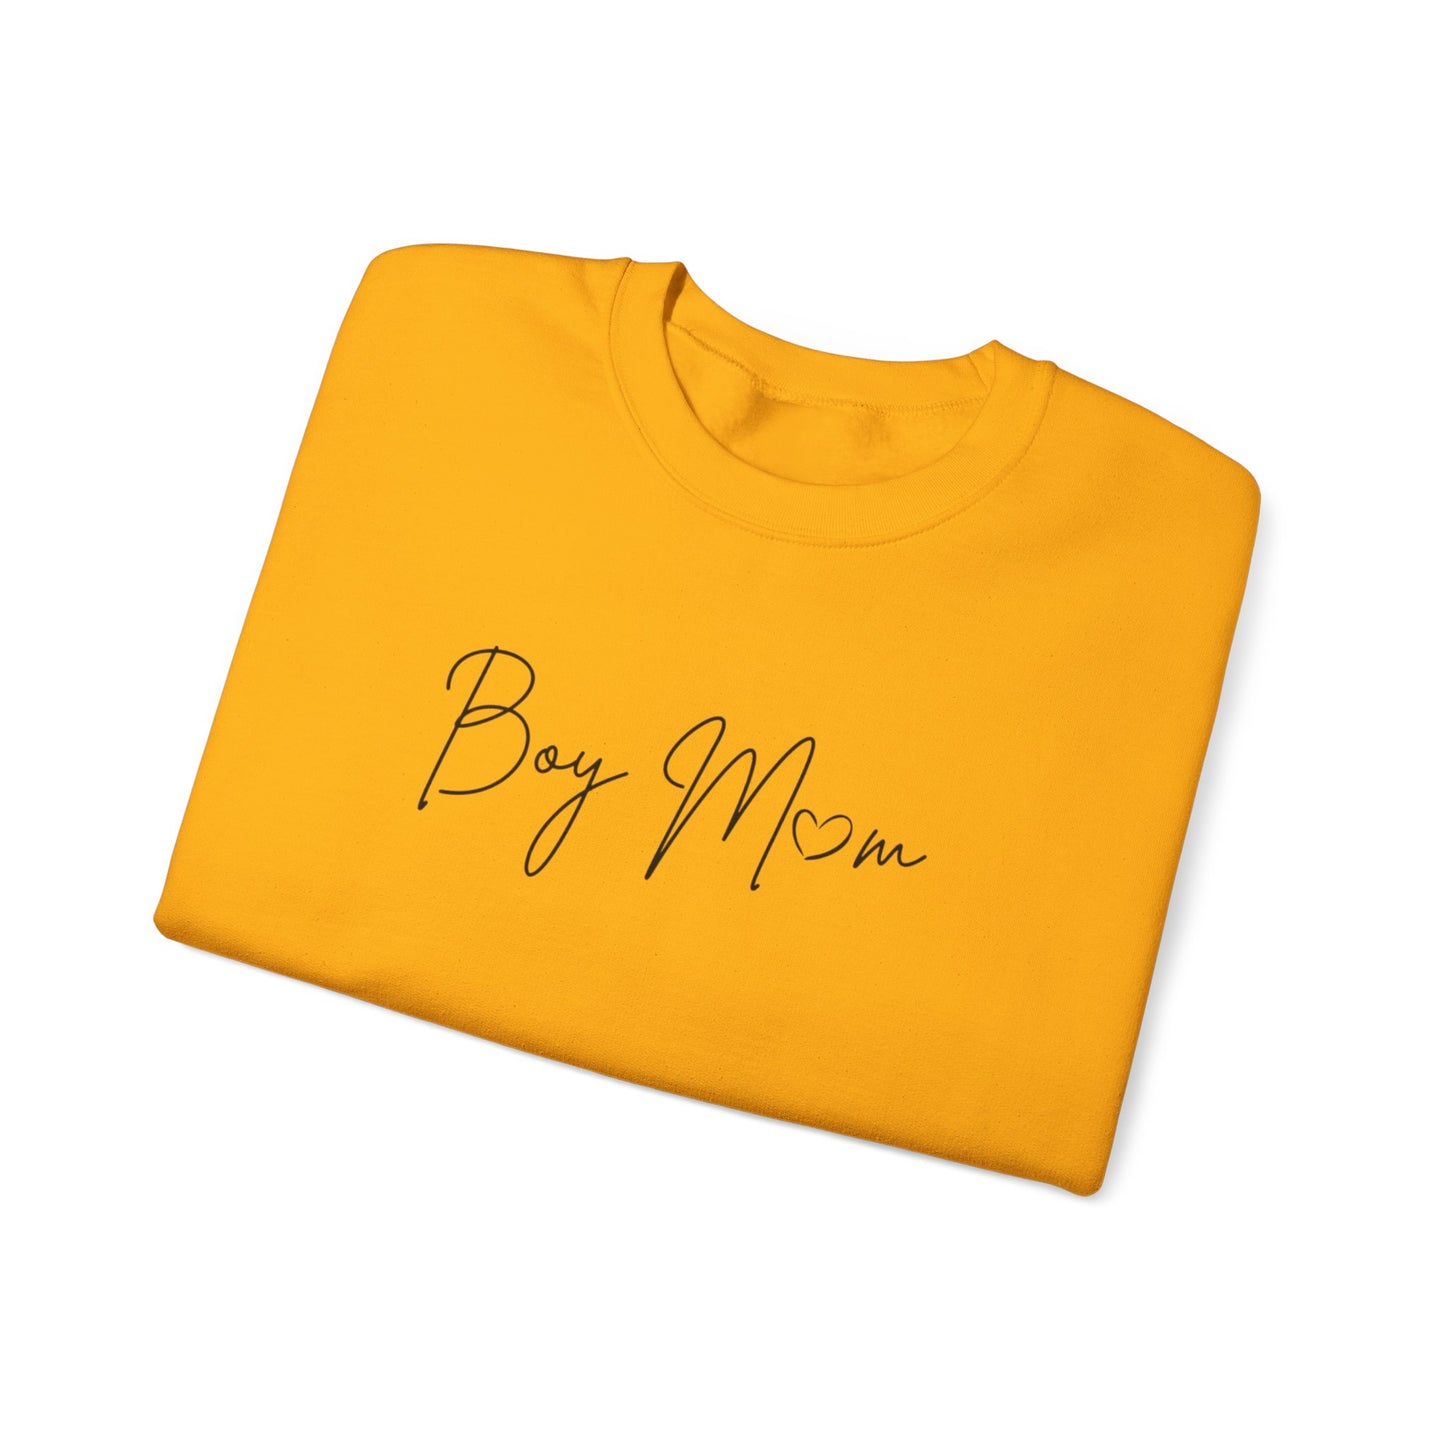 "Boy Mom" Crewneck Sweatshirt